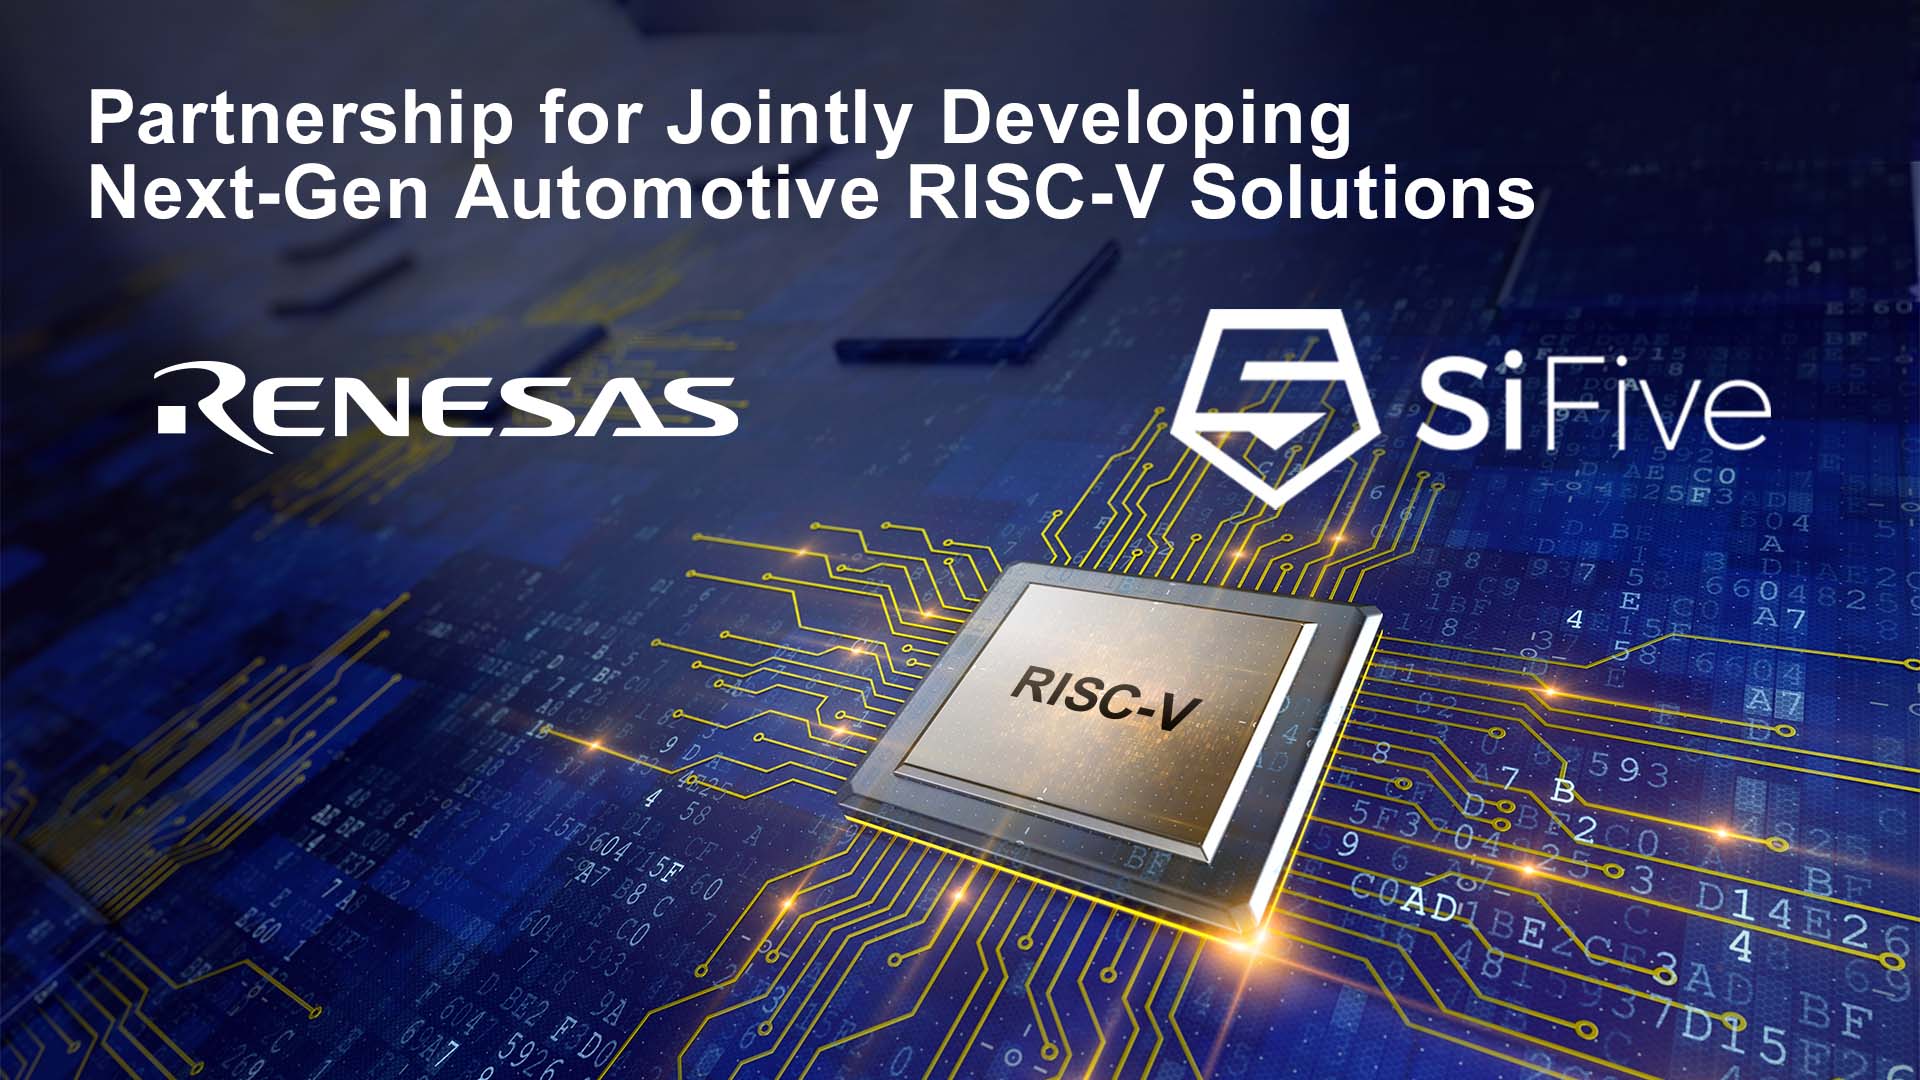 Next-Gen RISC-V Solutions for Automotive Applications